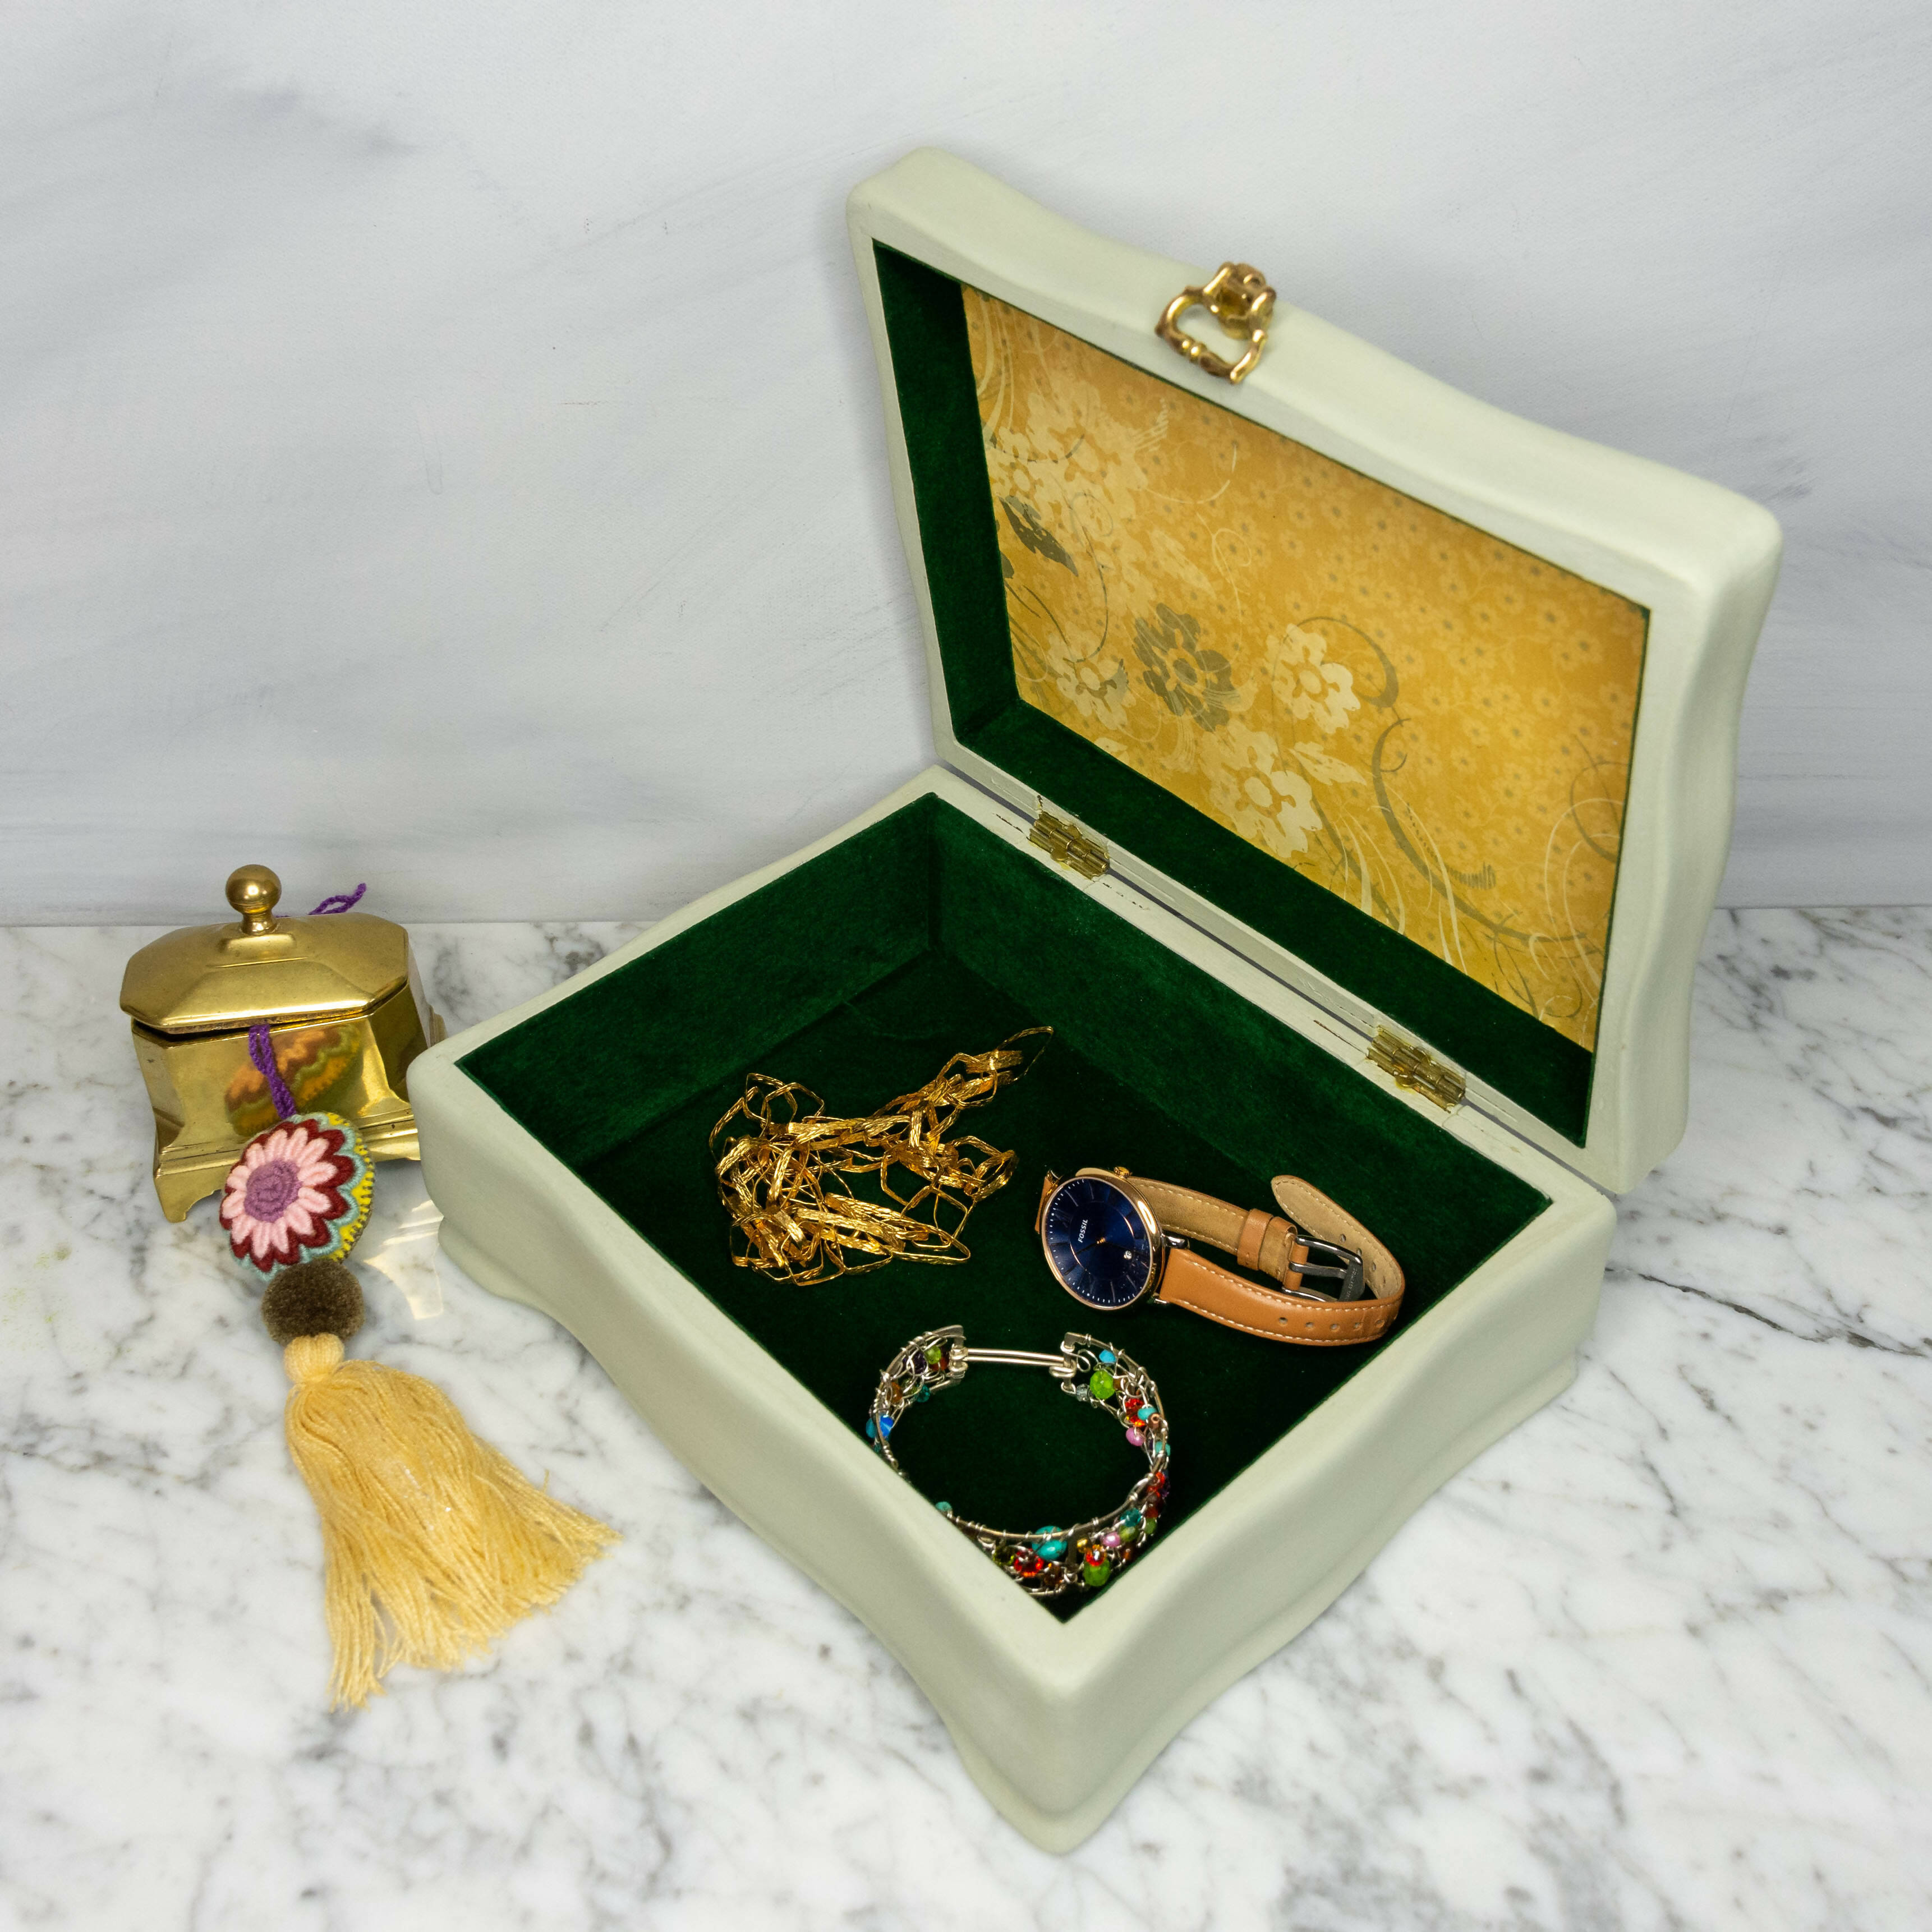 One of a kind Owl Jewelry Box, Upcycled Vintage Jewellery Box, Wood Je -  Ottawa Artisans